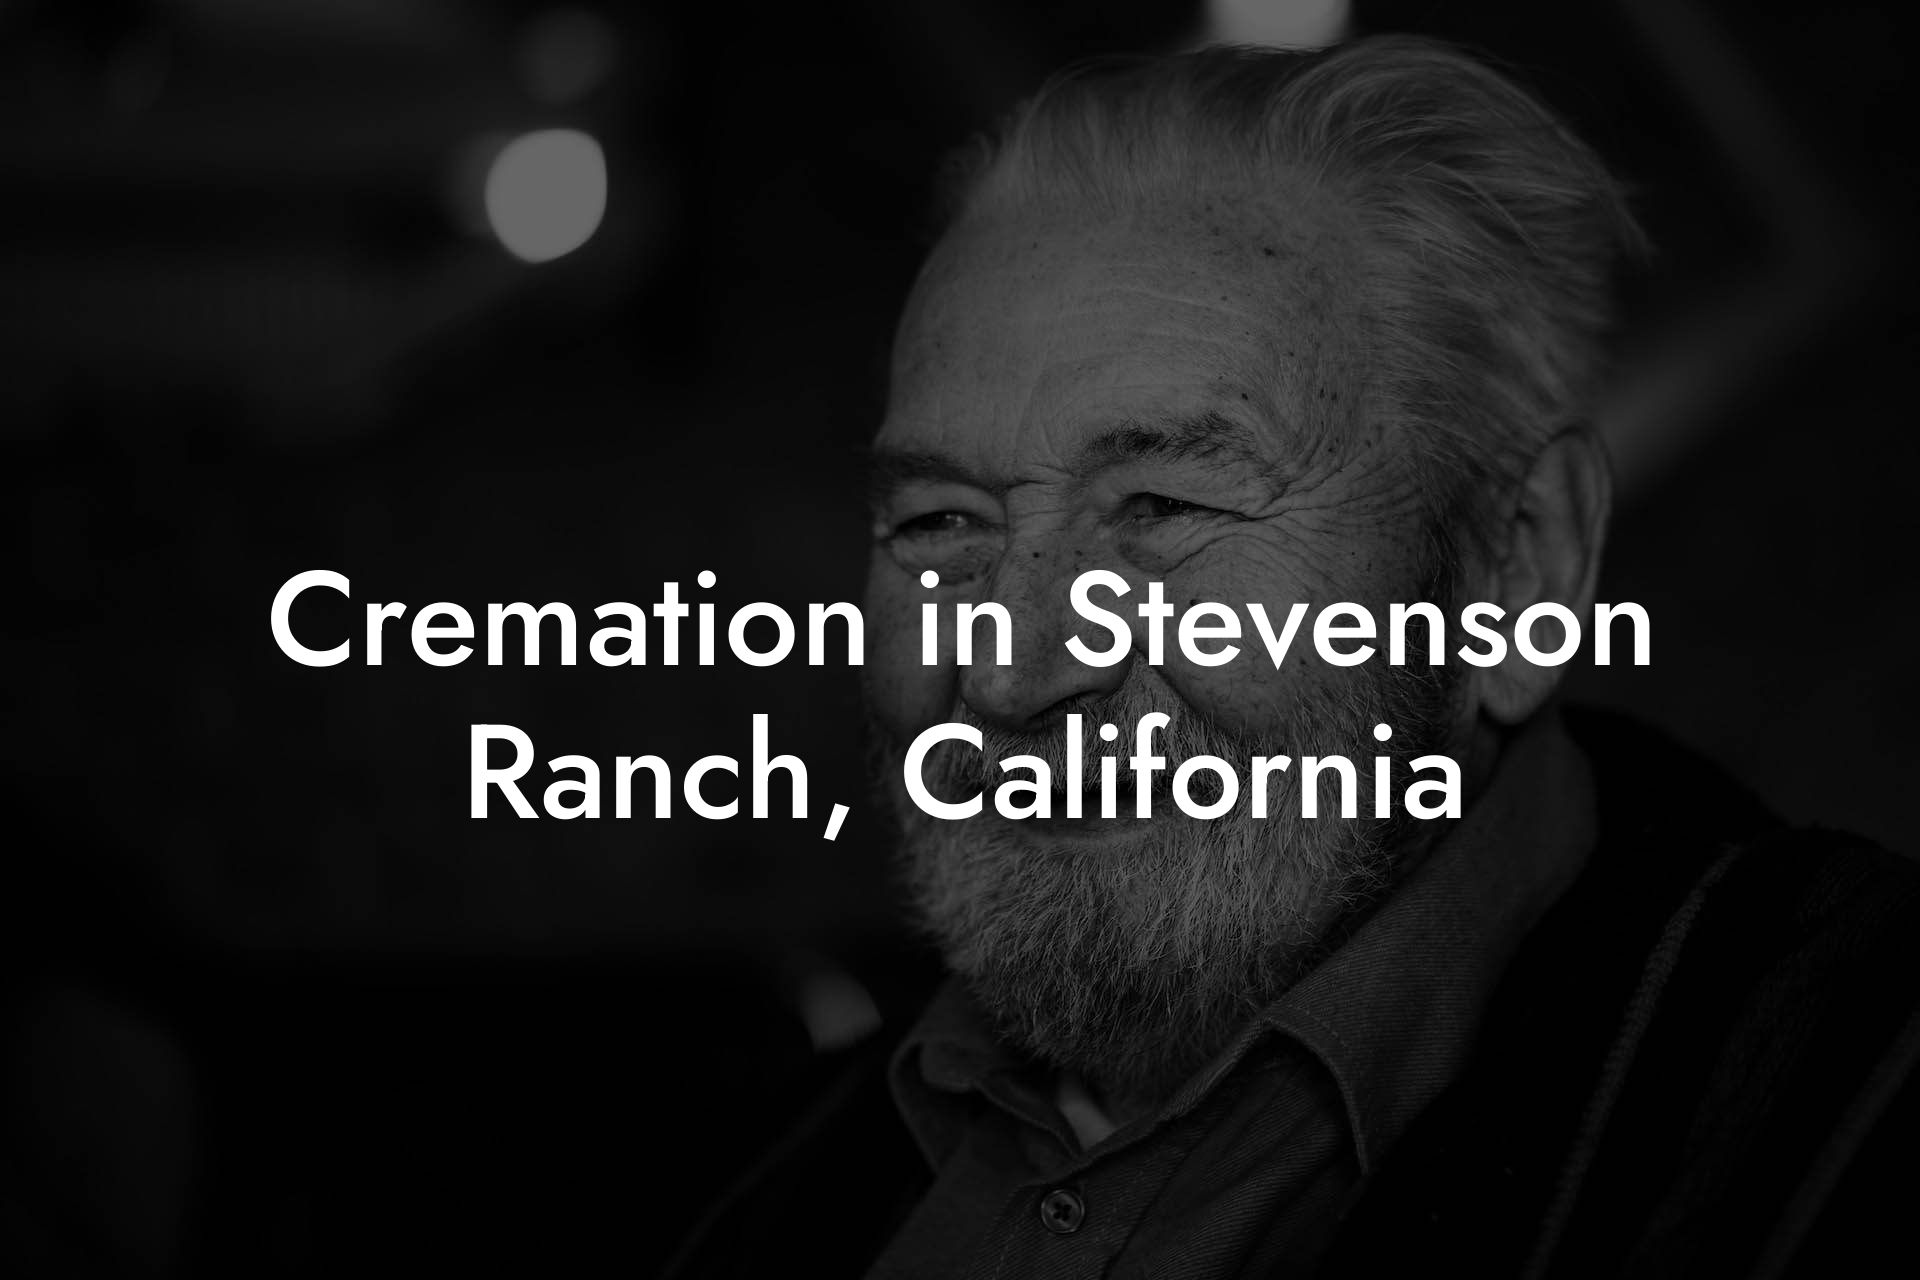 Cremation in Stevenson Ranch, California